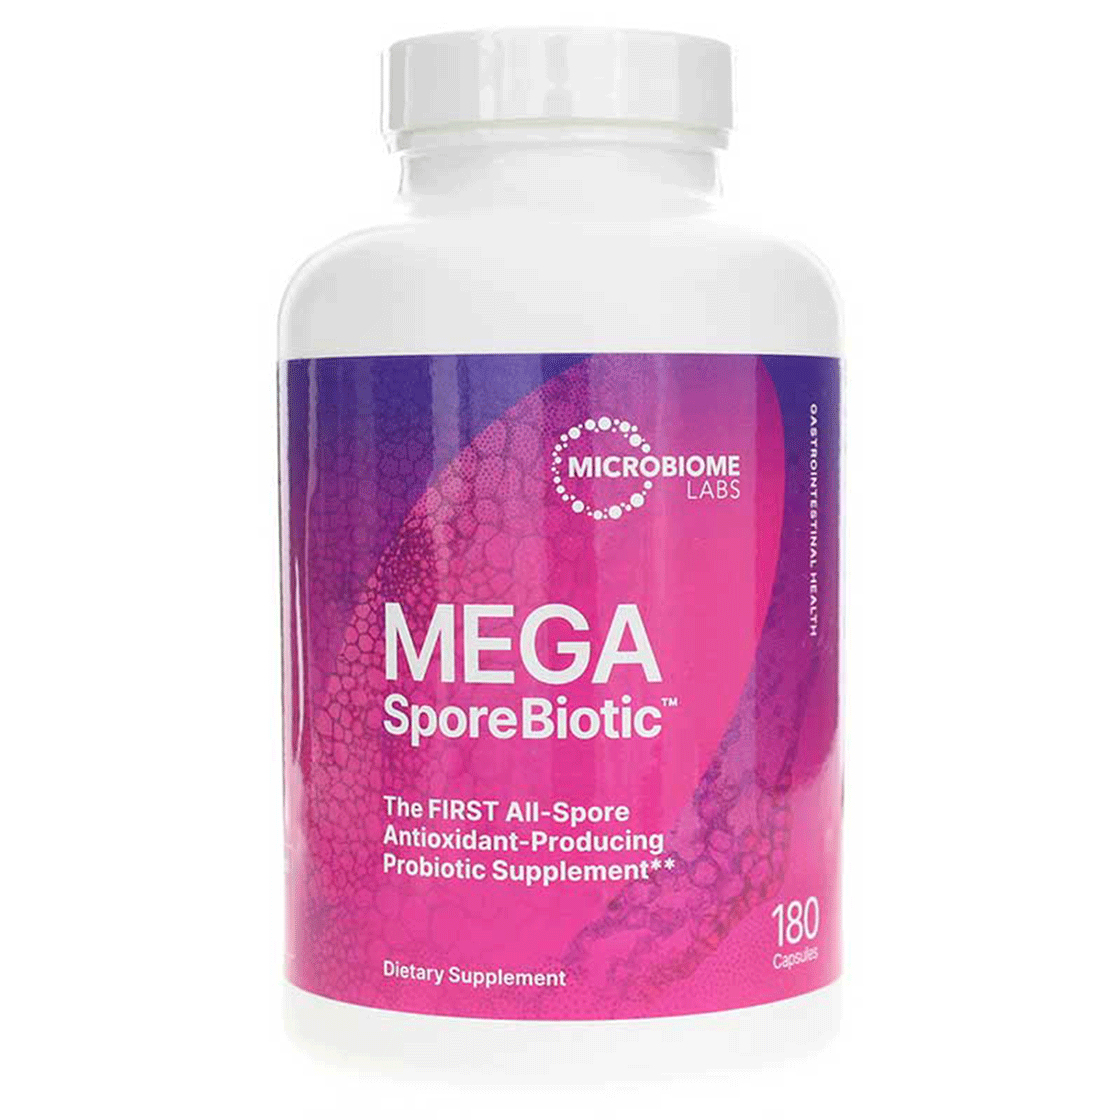 MegaSporeBiotic 180 Capsules by Microbiome Labs